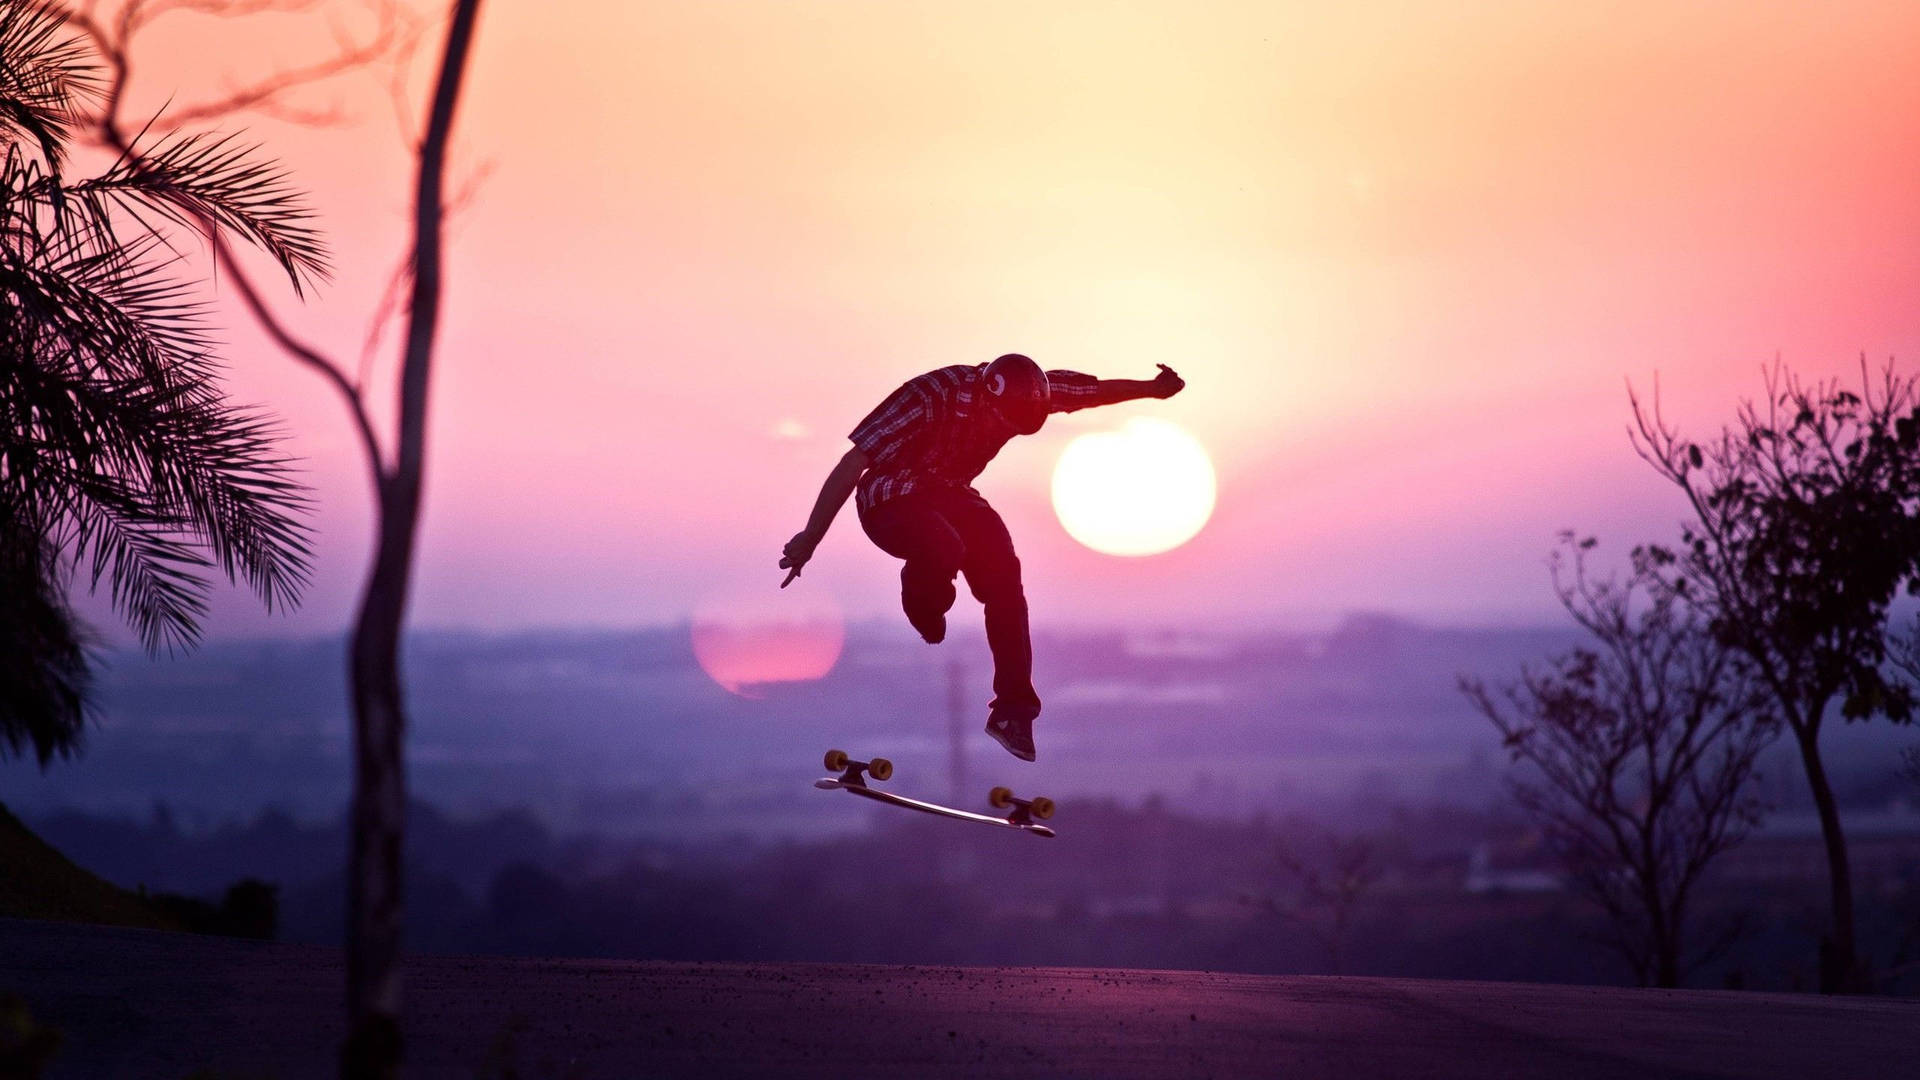 Skateboard In The Sunset